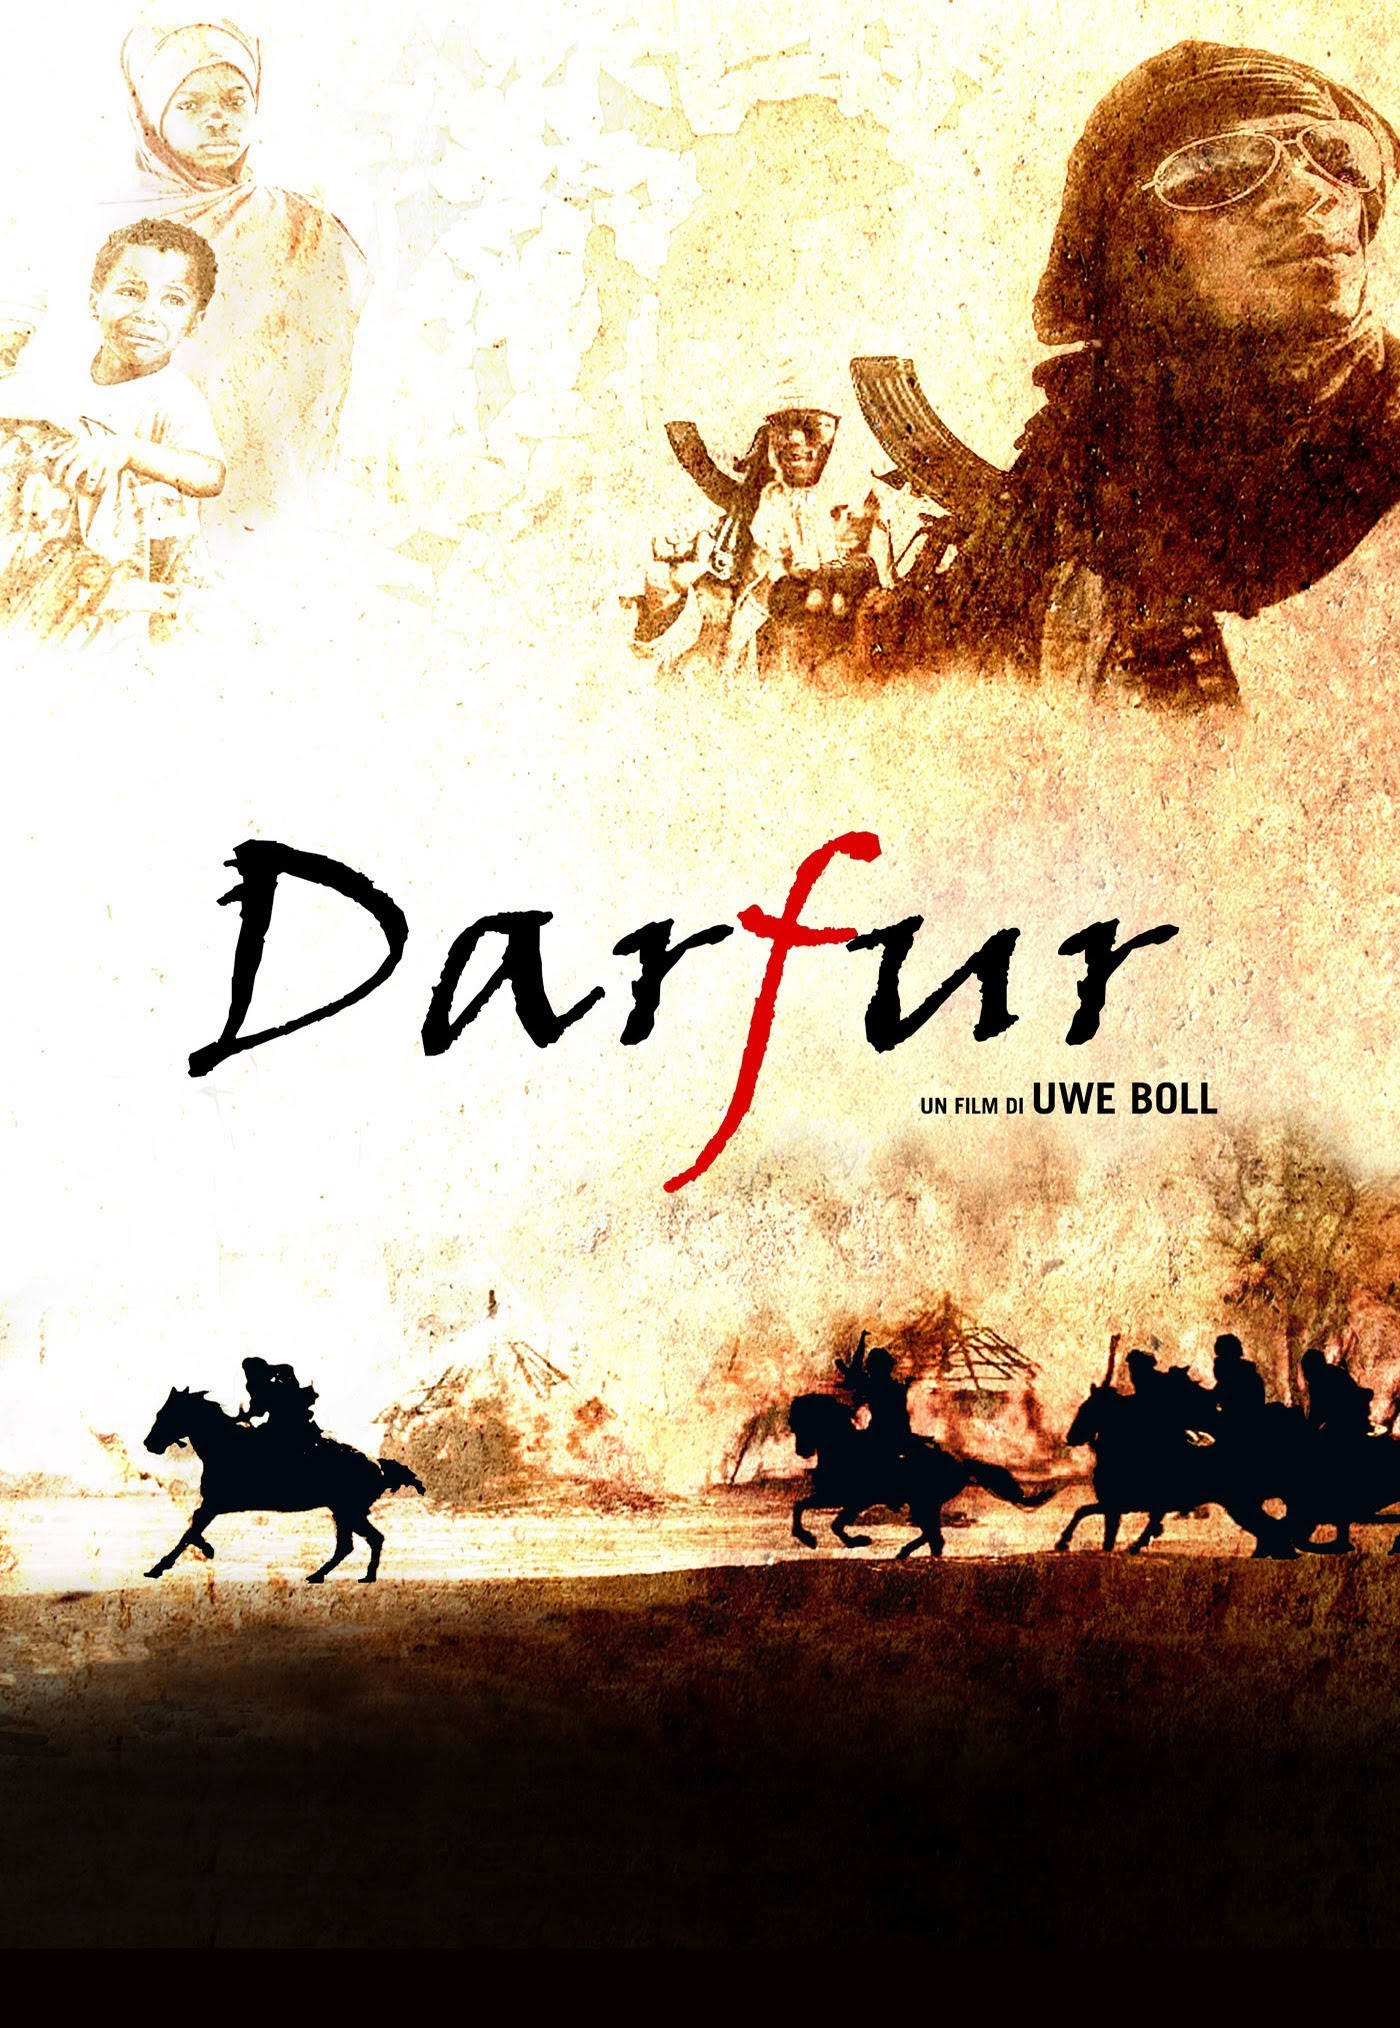 Darfur [HD] (2009)